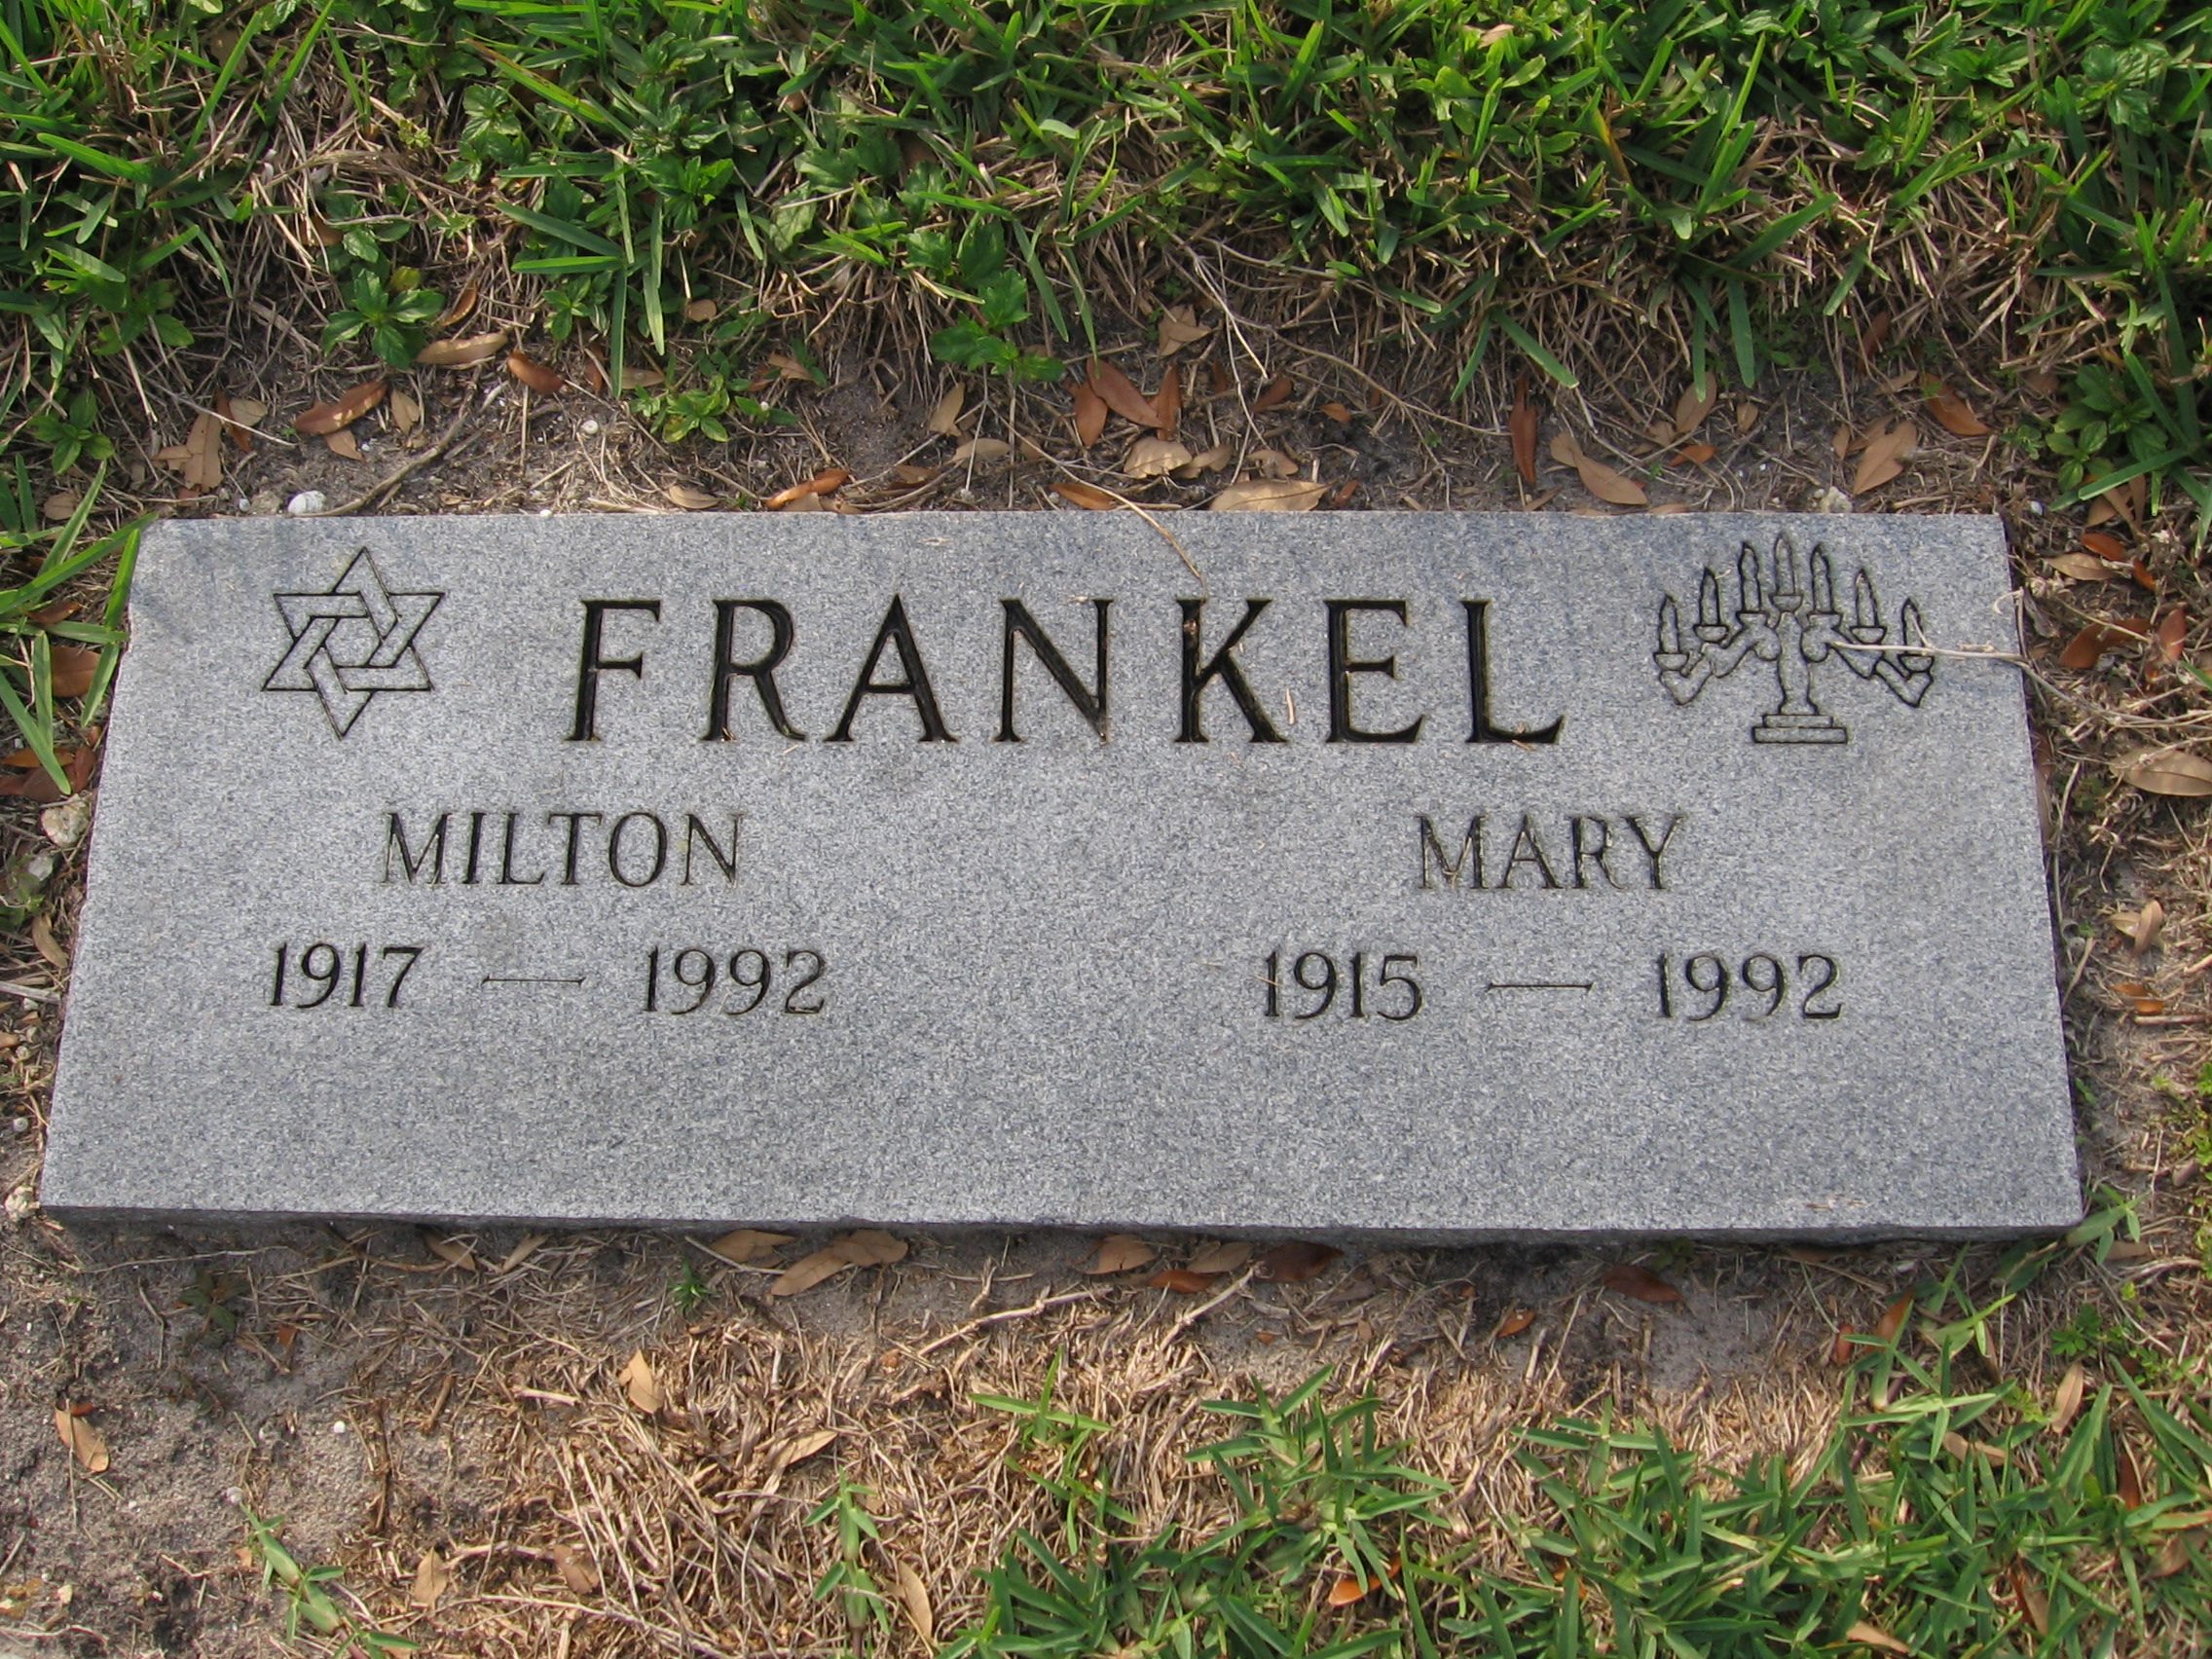 Mary Frankel